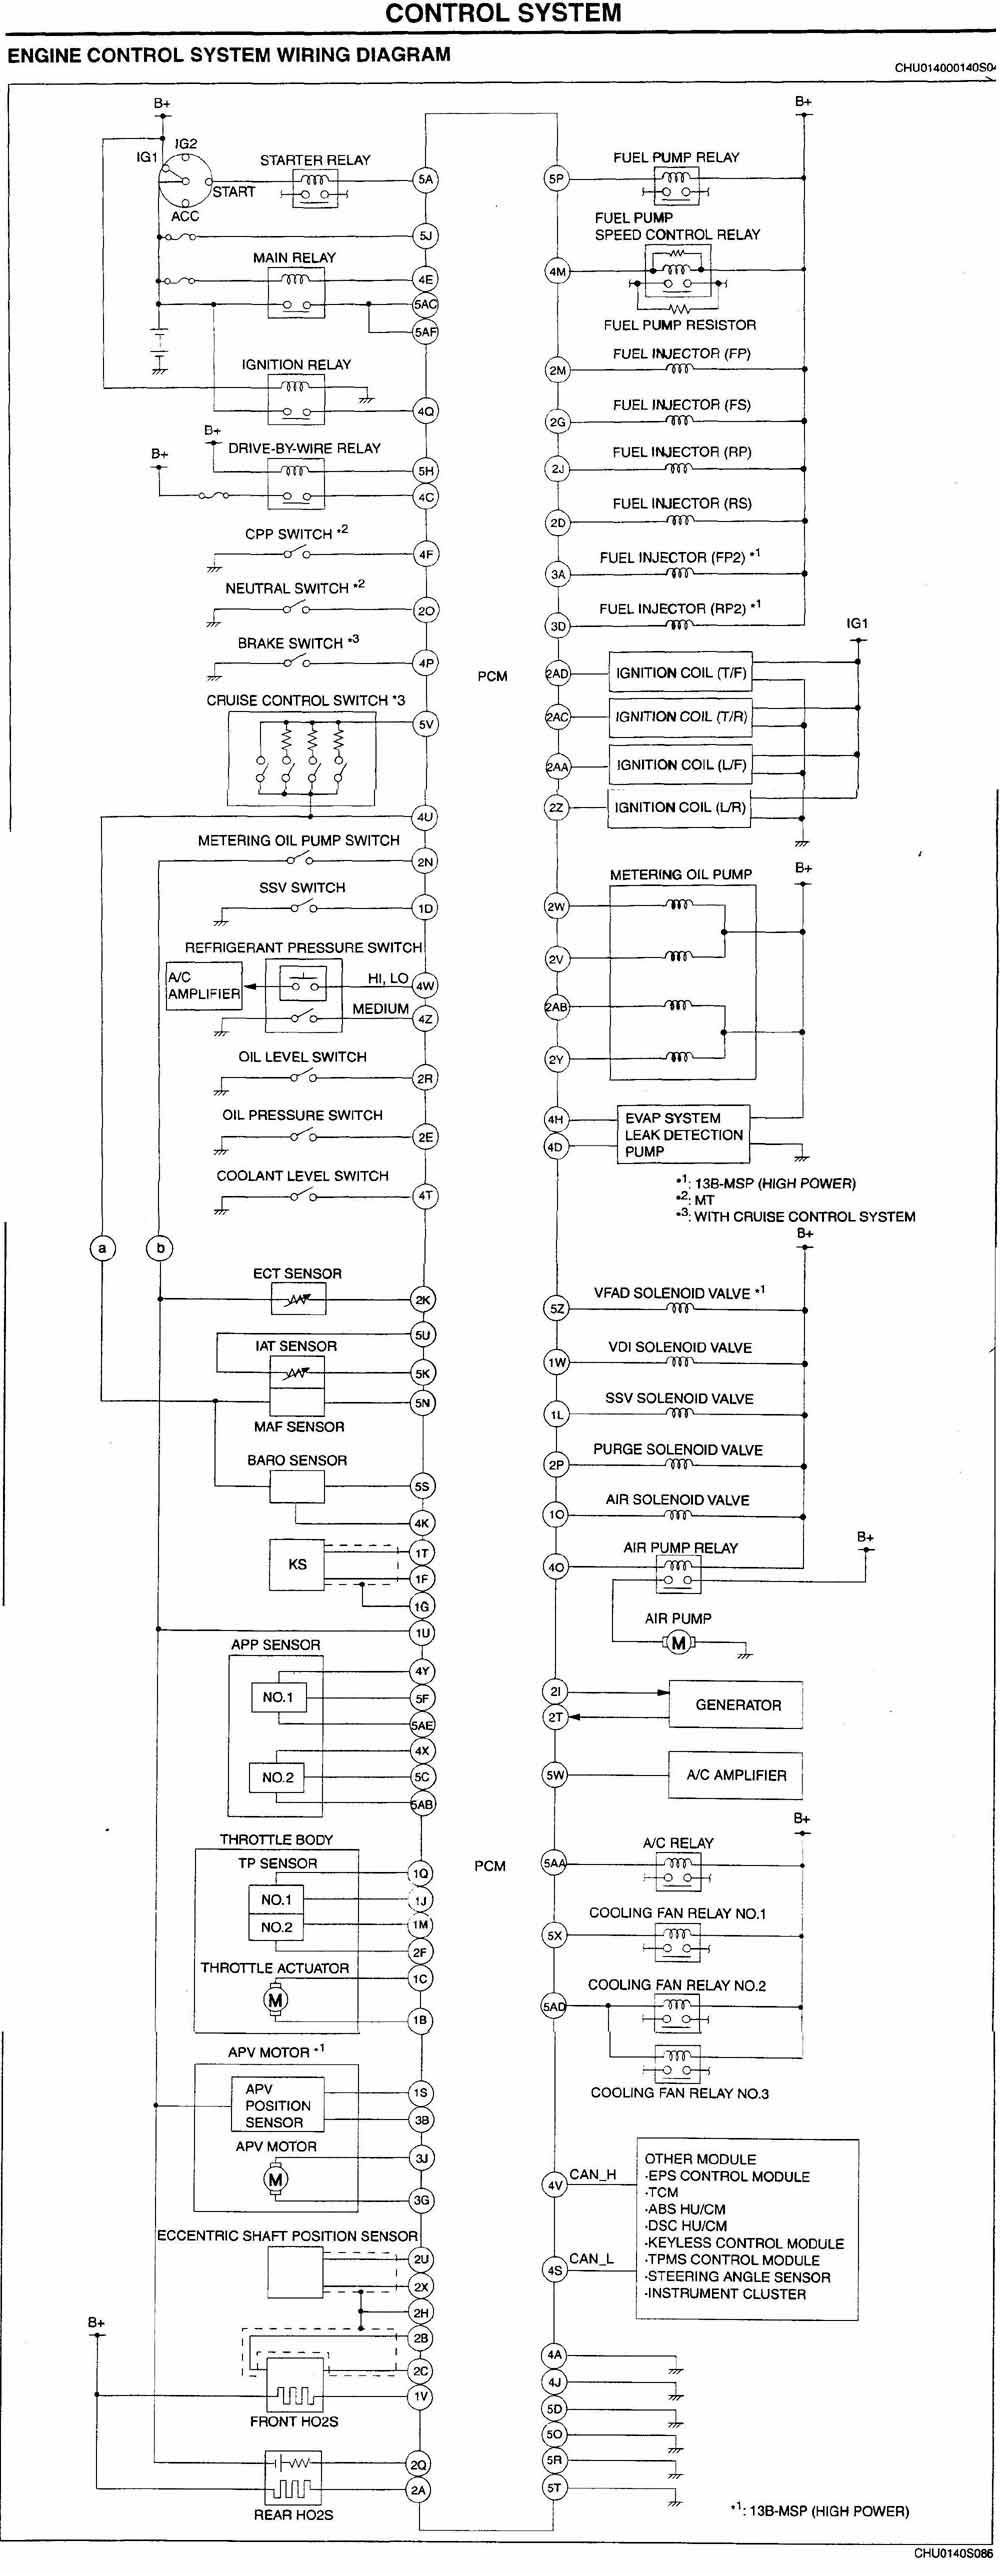 1jzge ecu wiring diagram